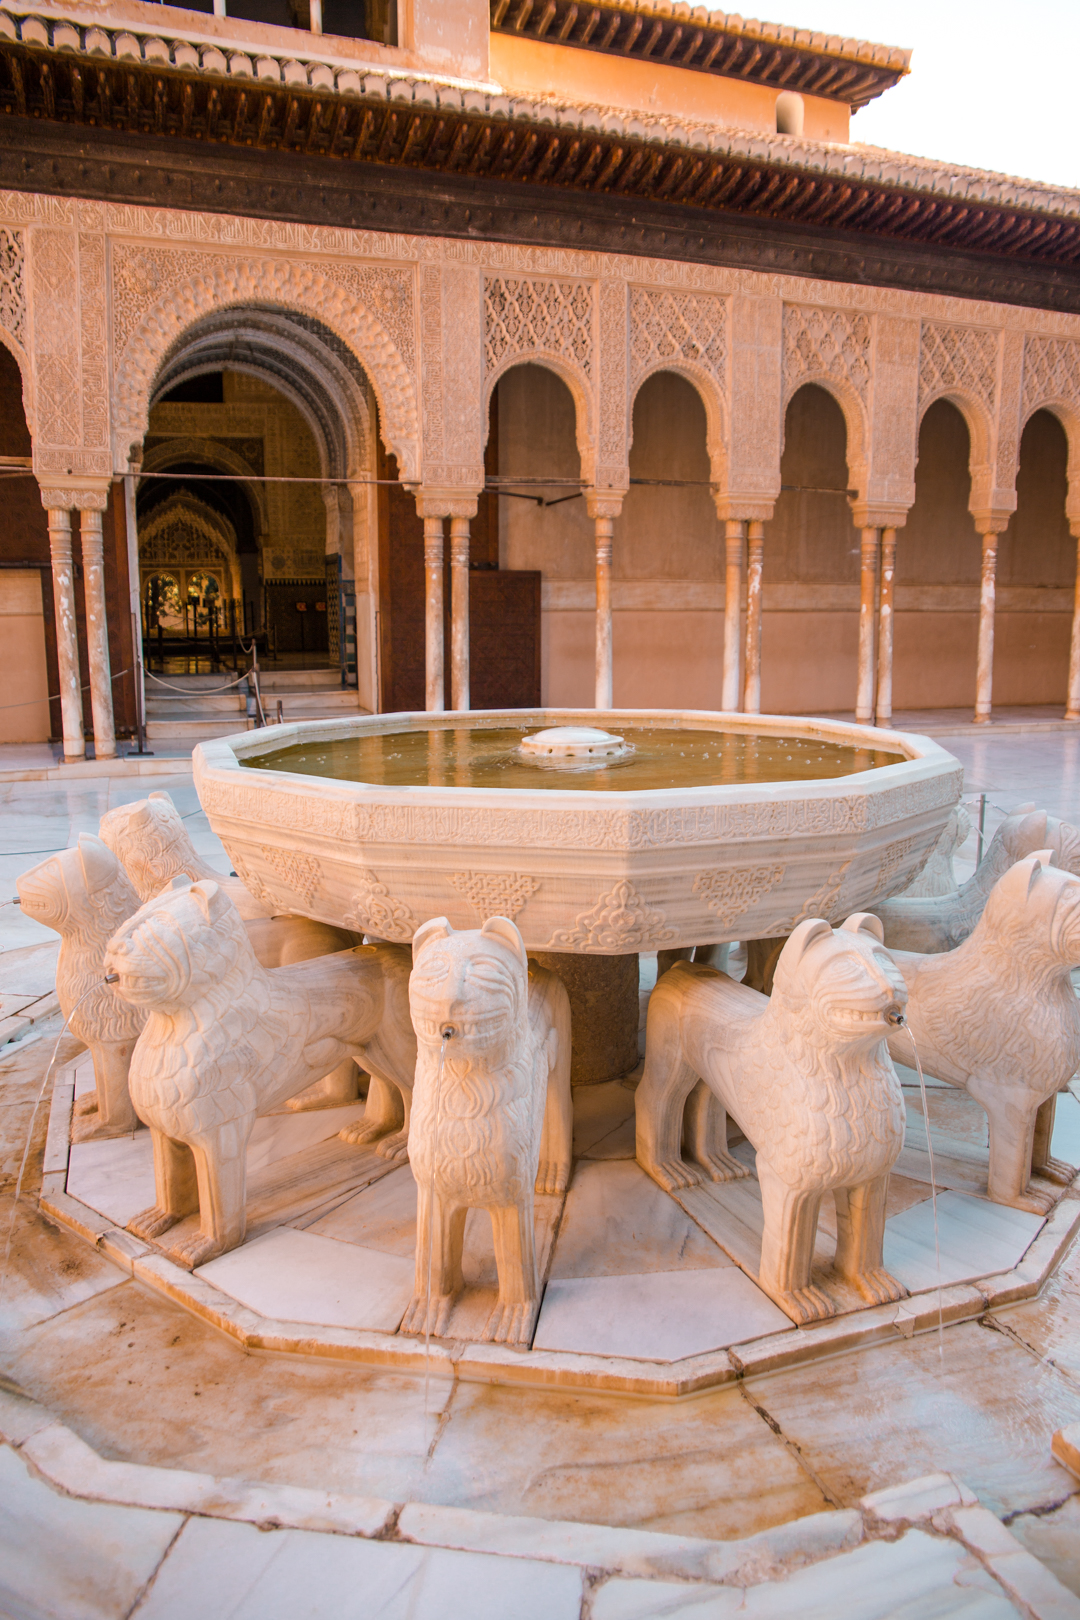 Detailed photo of the Patio de los Leones fountain in Alhambra, Granada.